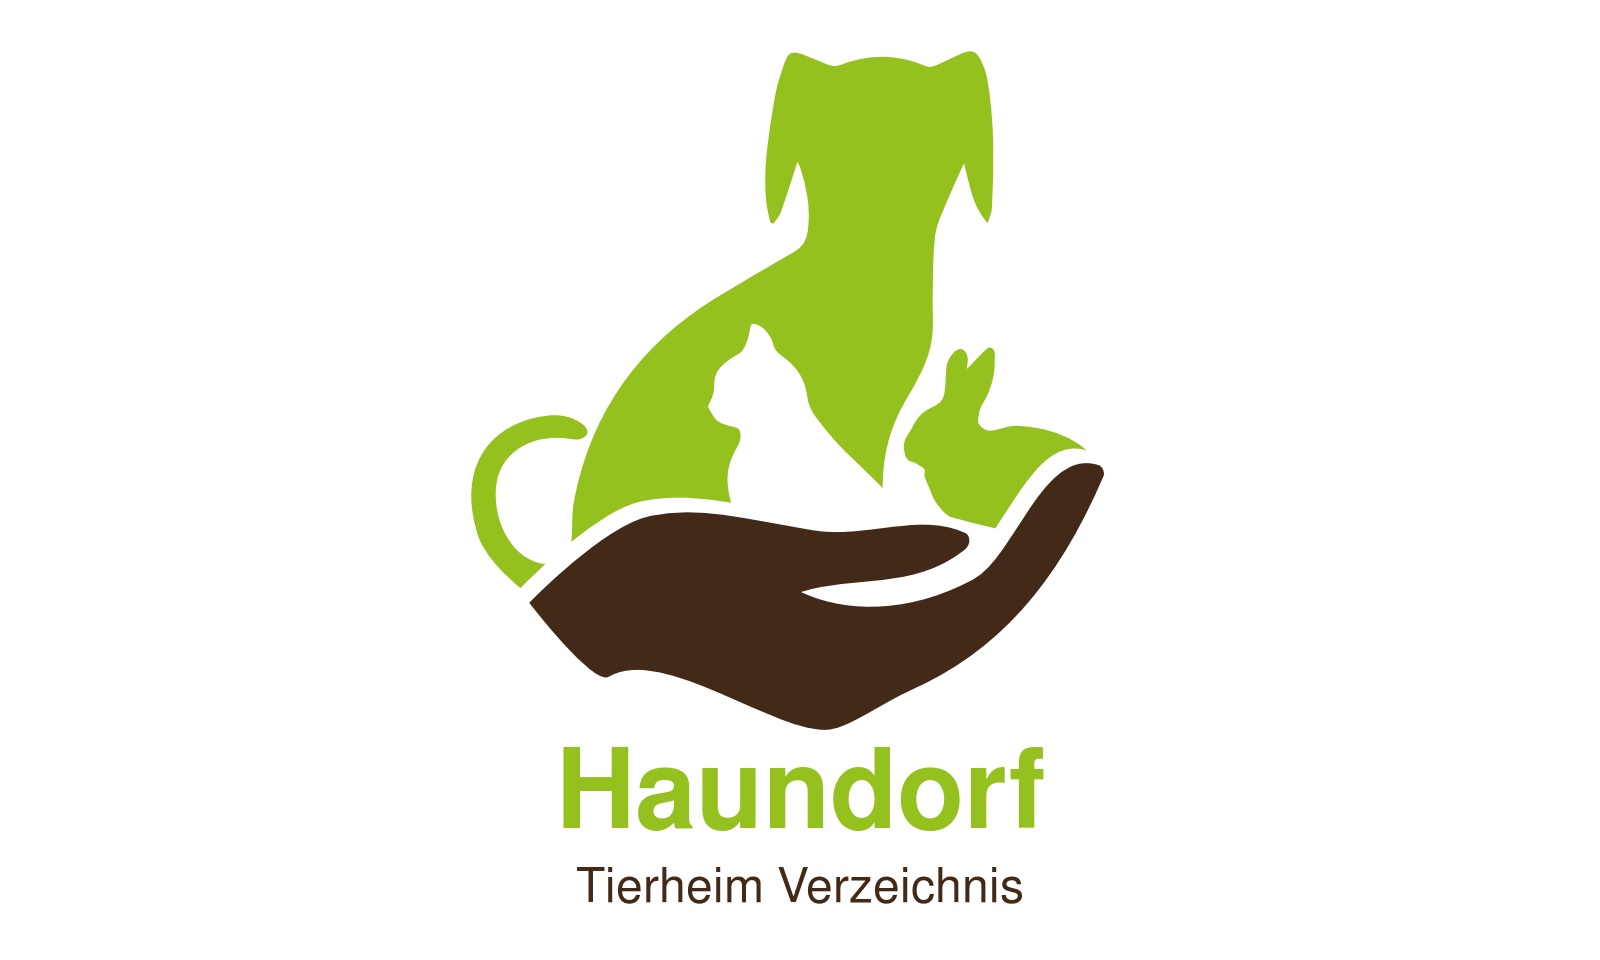 Tierheim Haundorf